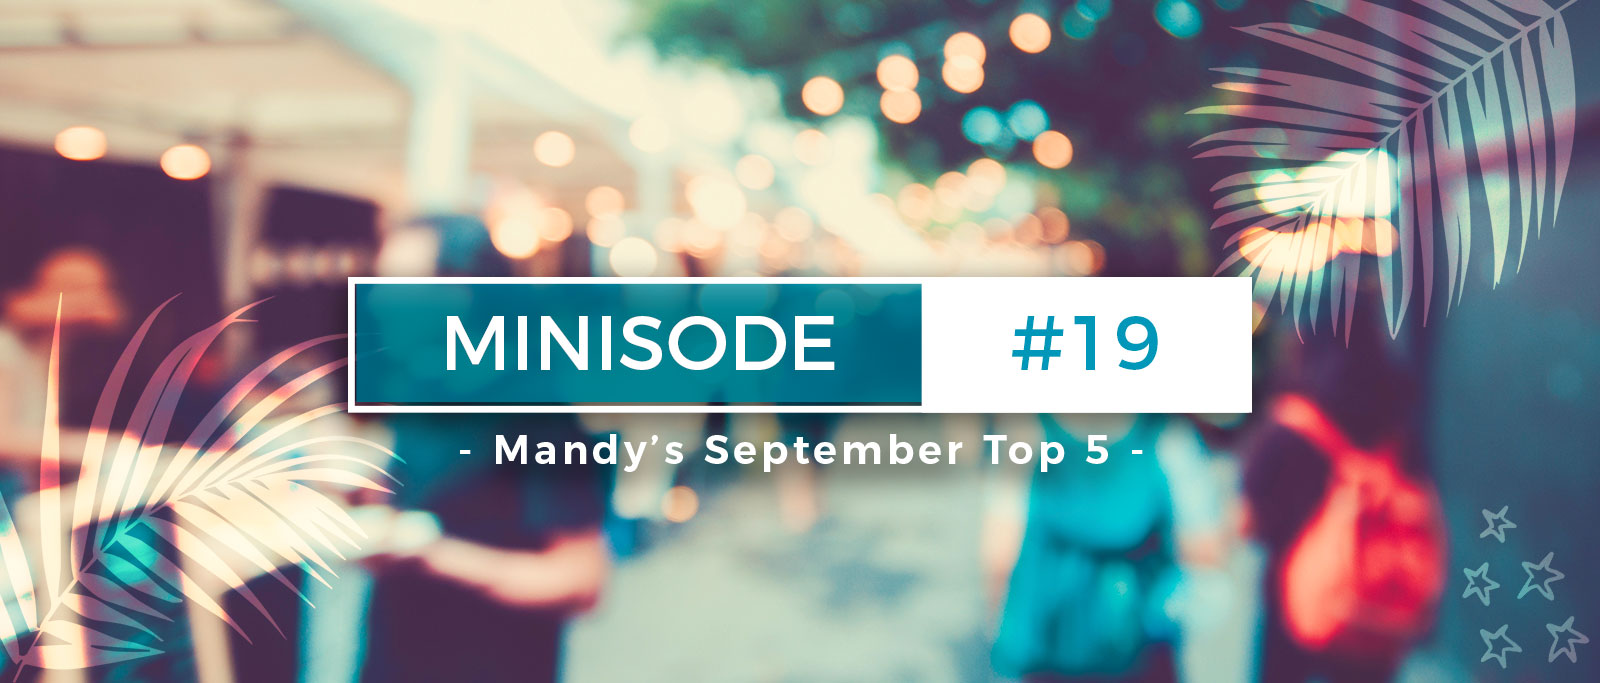 minisode-19-september-top-5